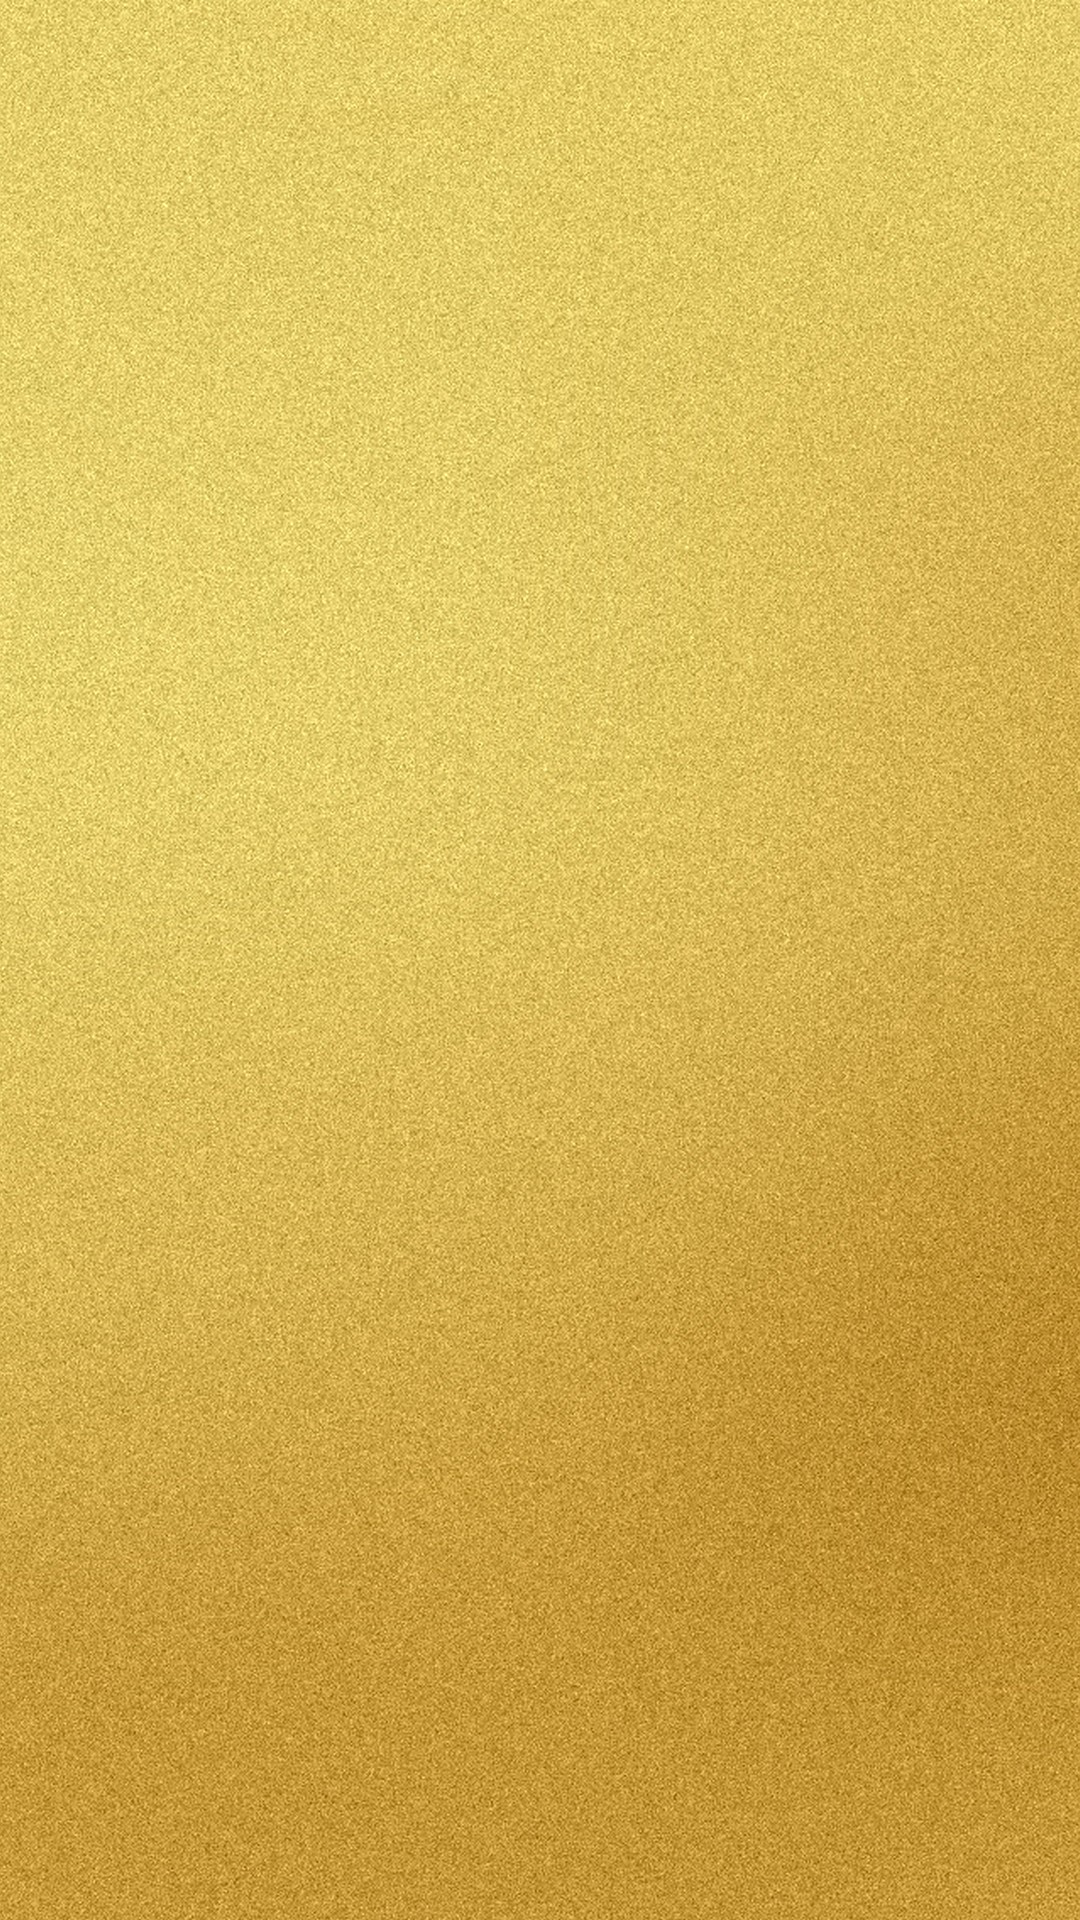 Plain Gold iPhone Wallpaper resolution 1080x1920